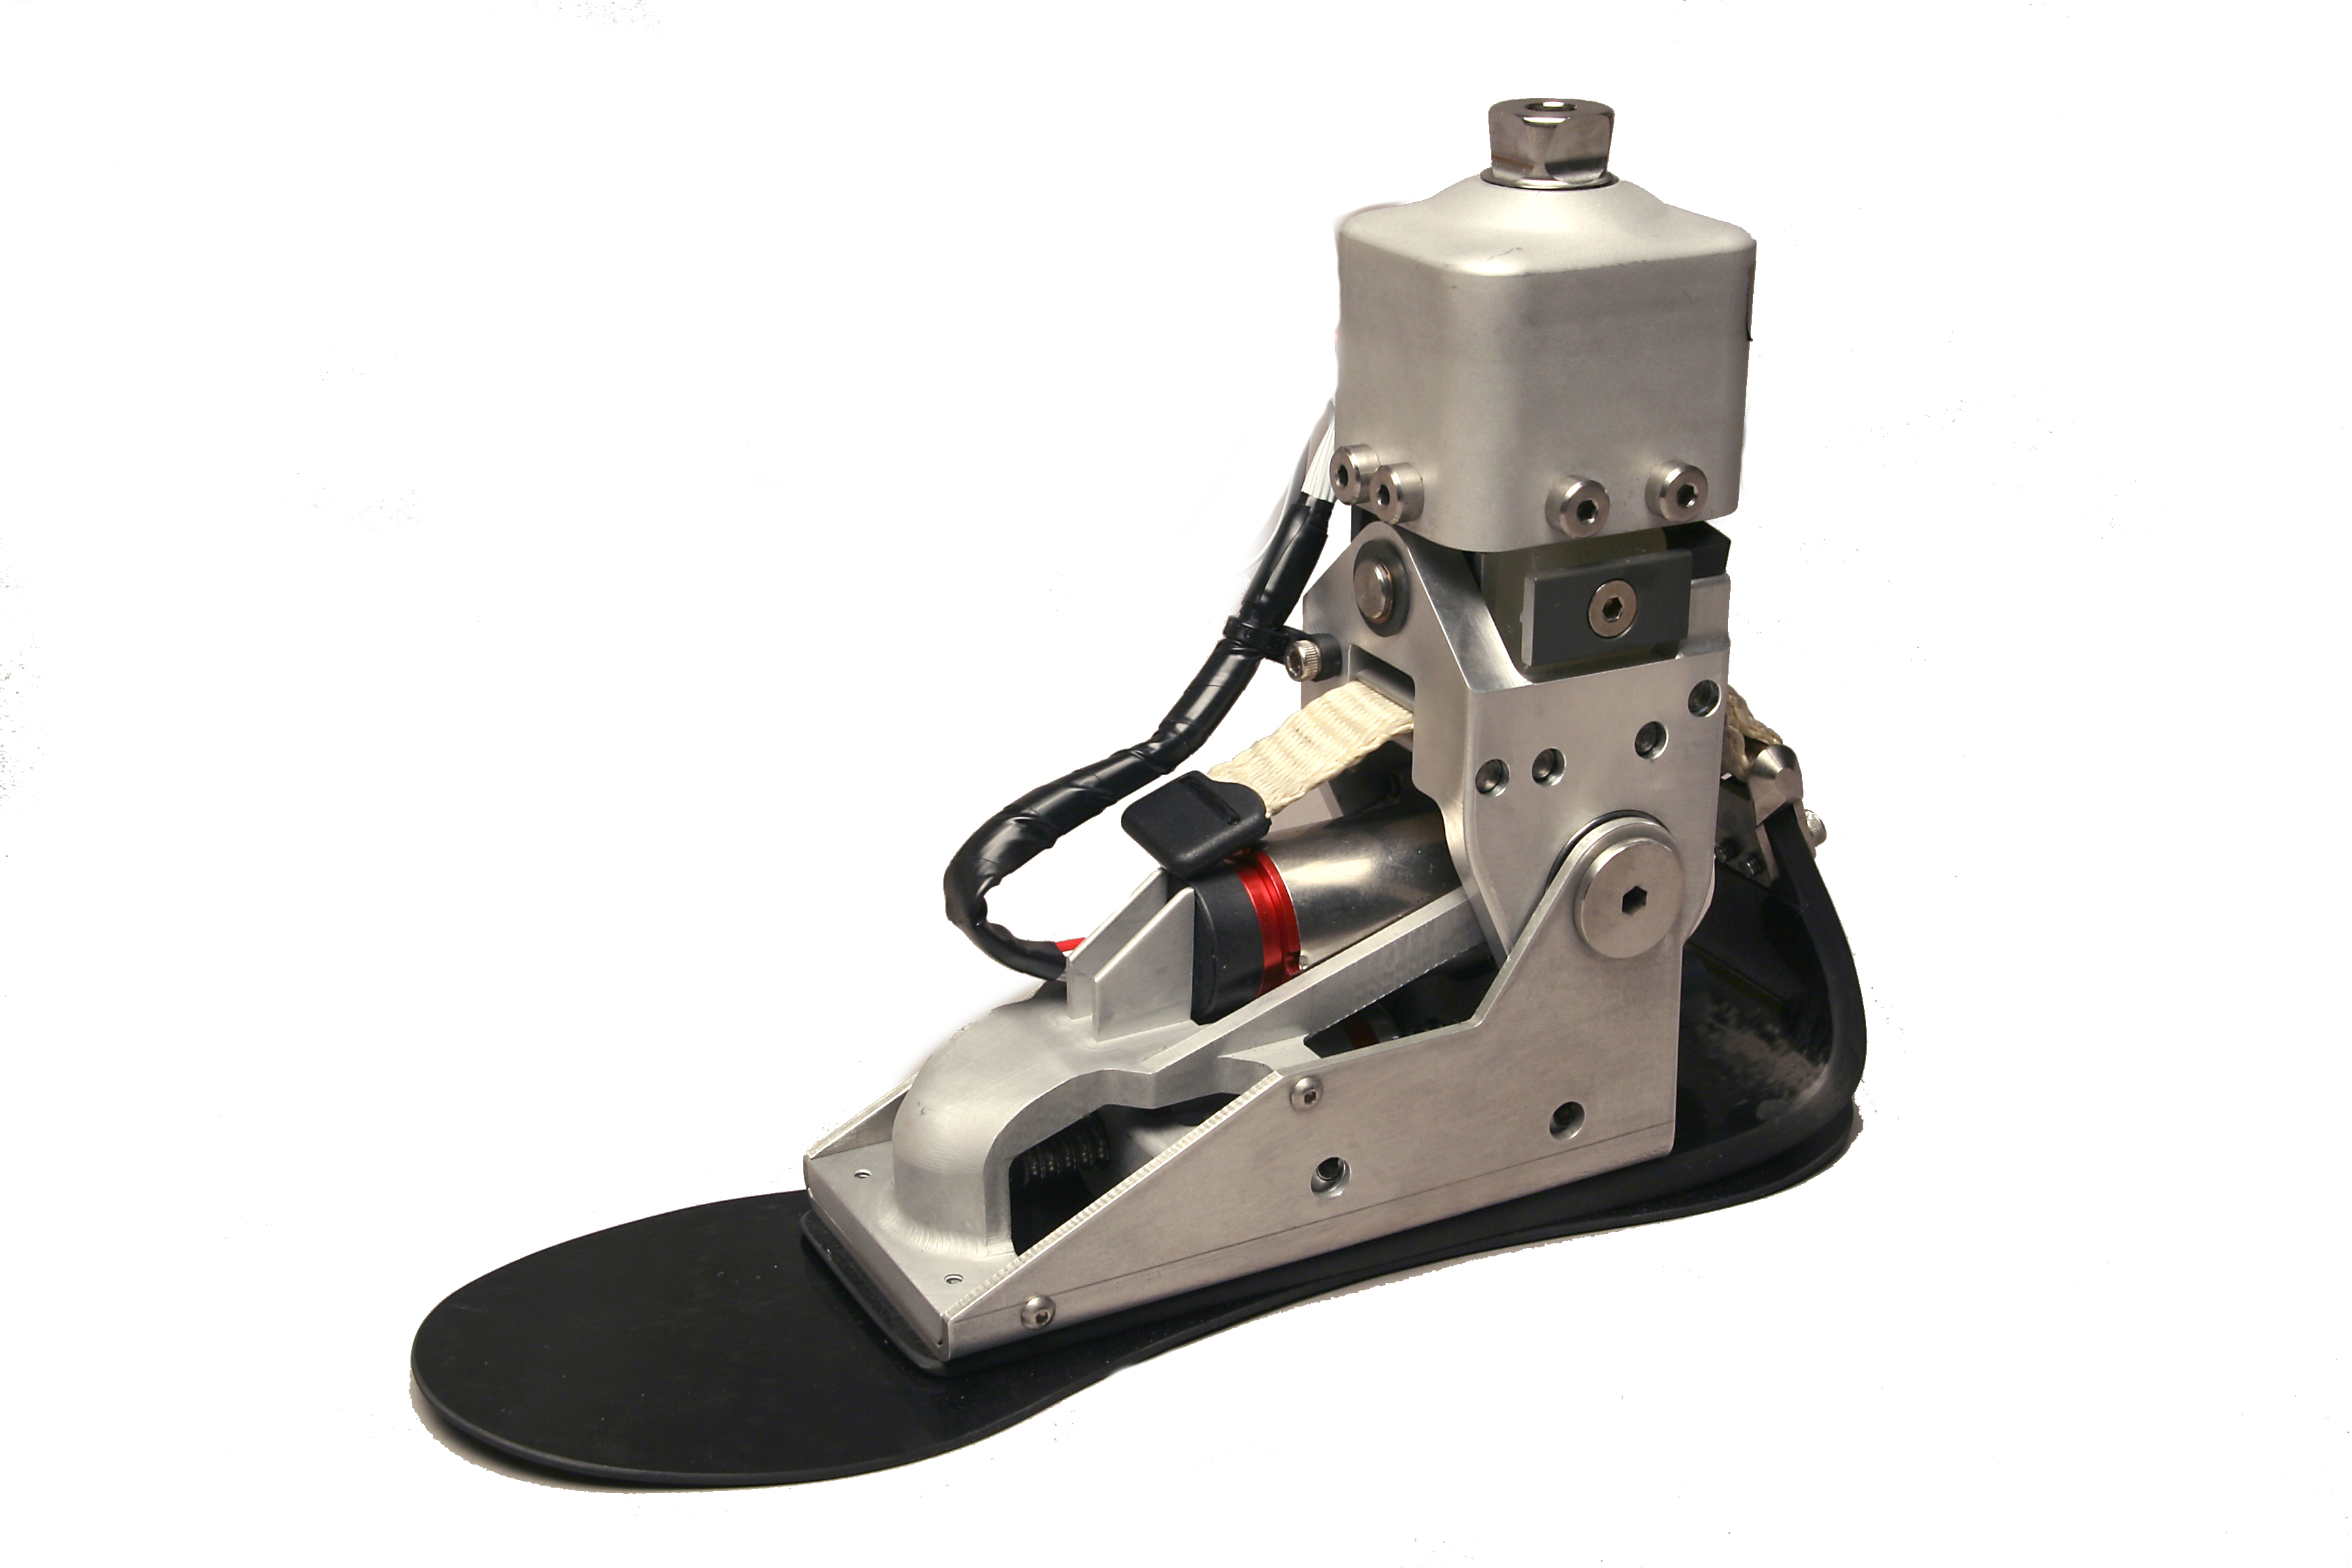 Startup iWalk Lands Funding for Robotic Prosthetics Spectrum